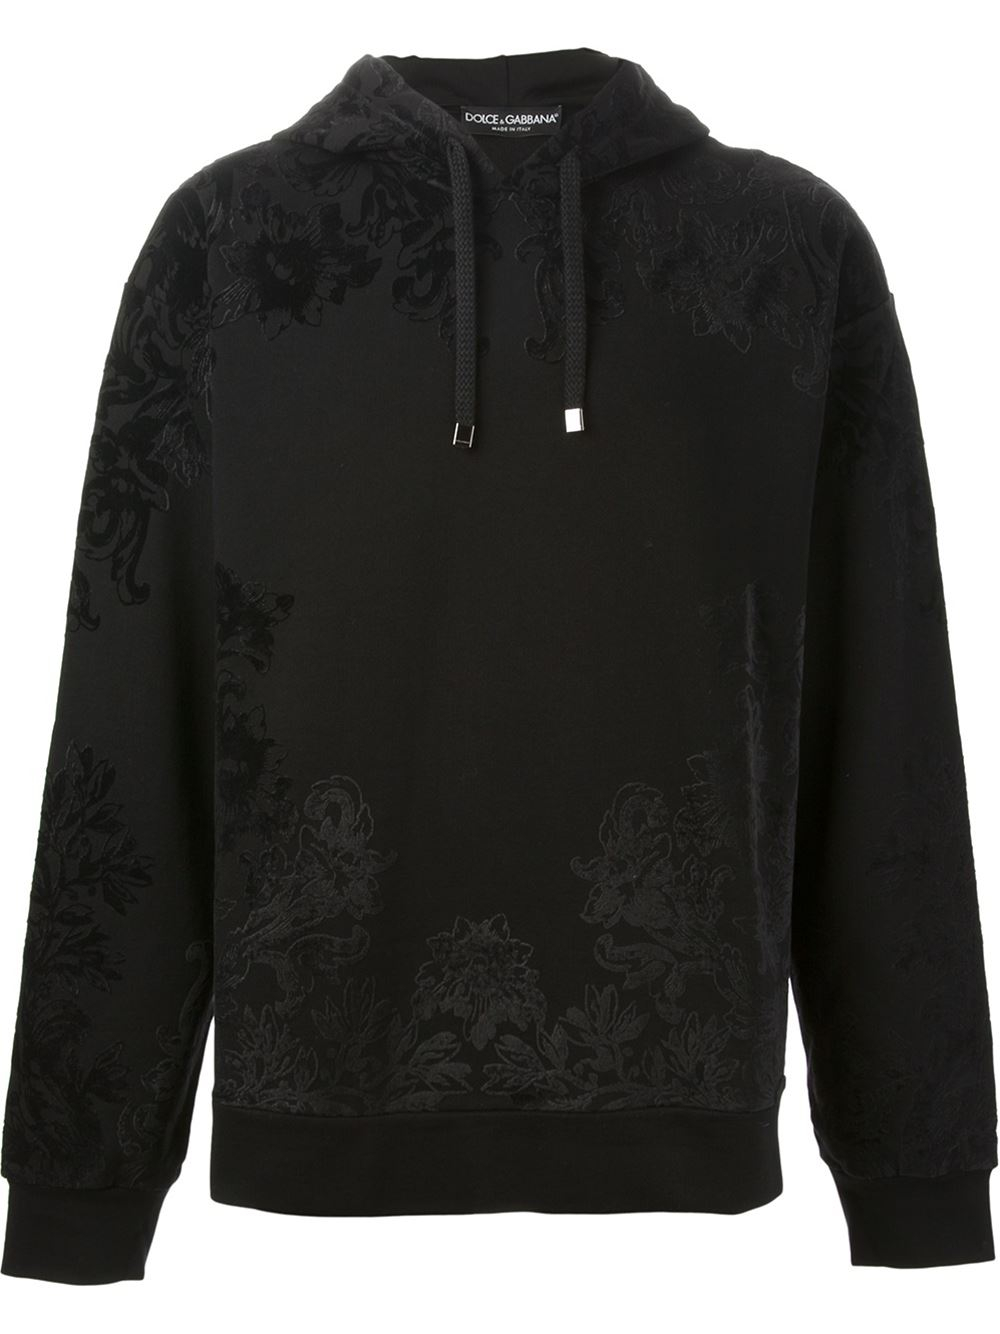 Lyst - Dolce & Gabbana Floral Print Hoodie in Black for Men